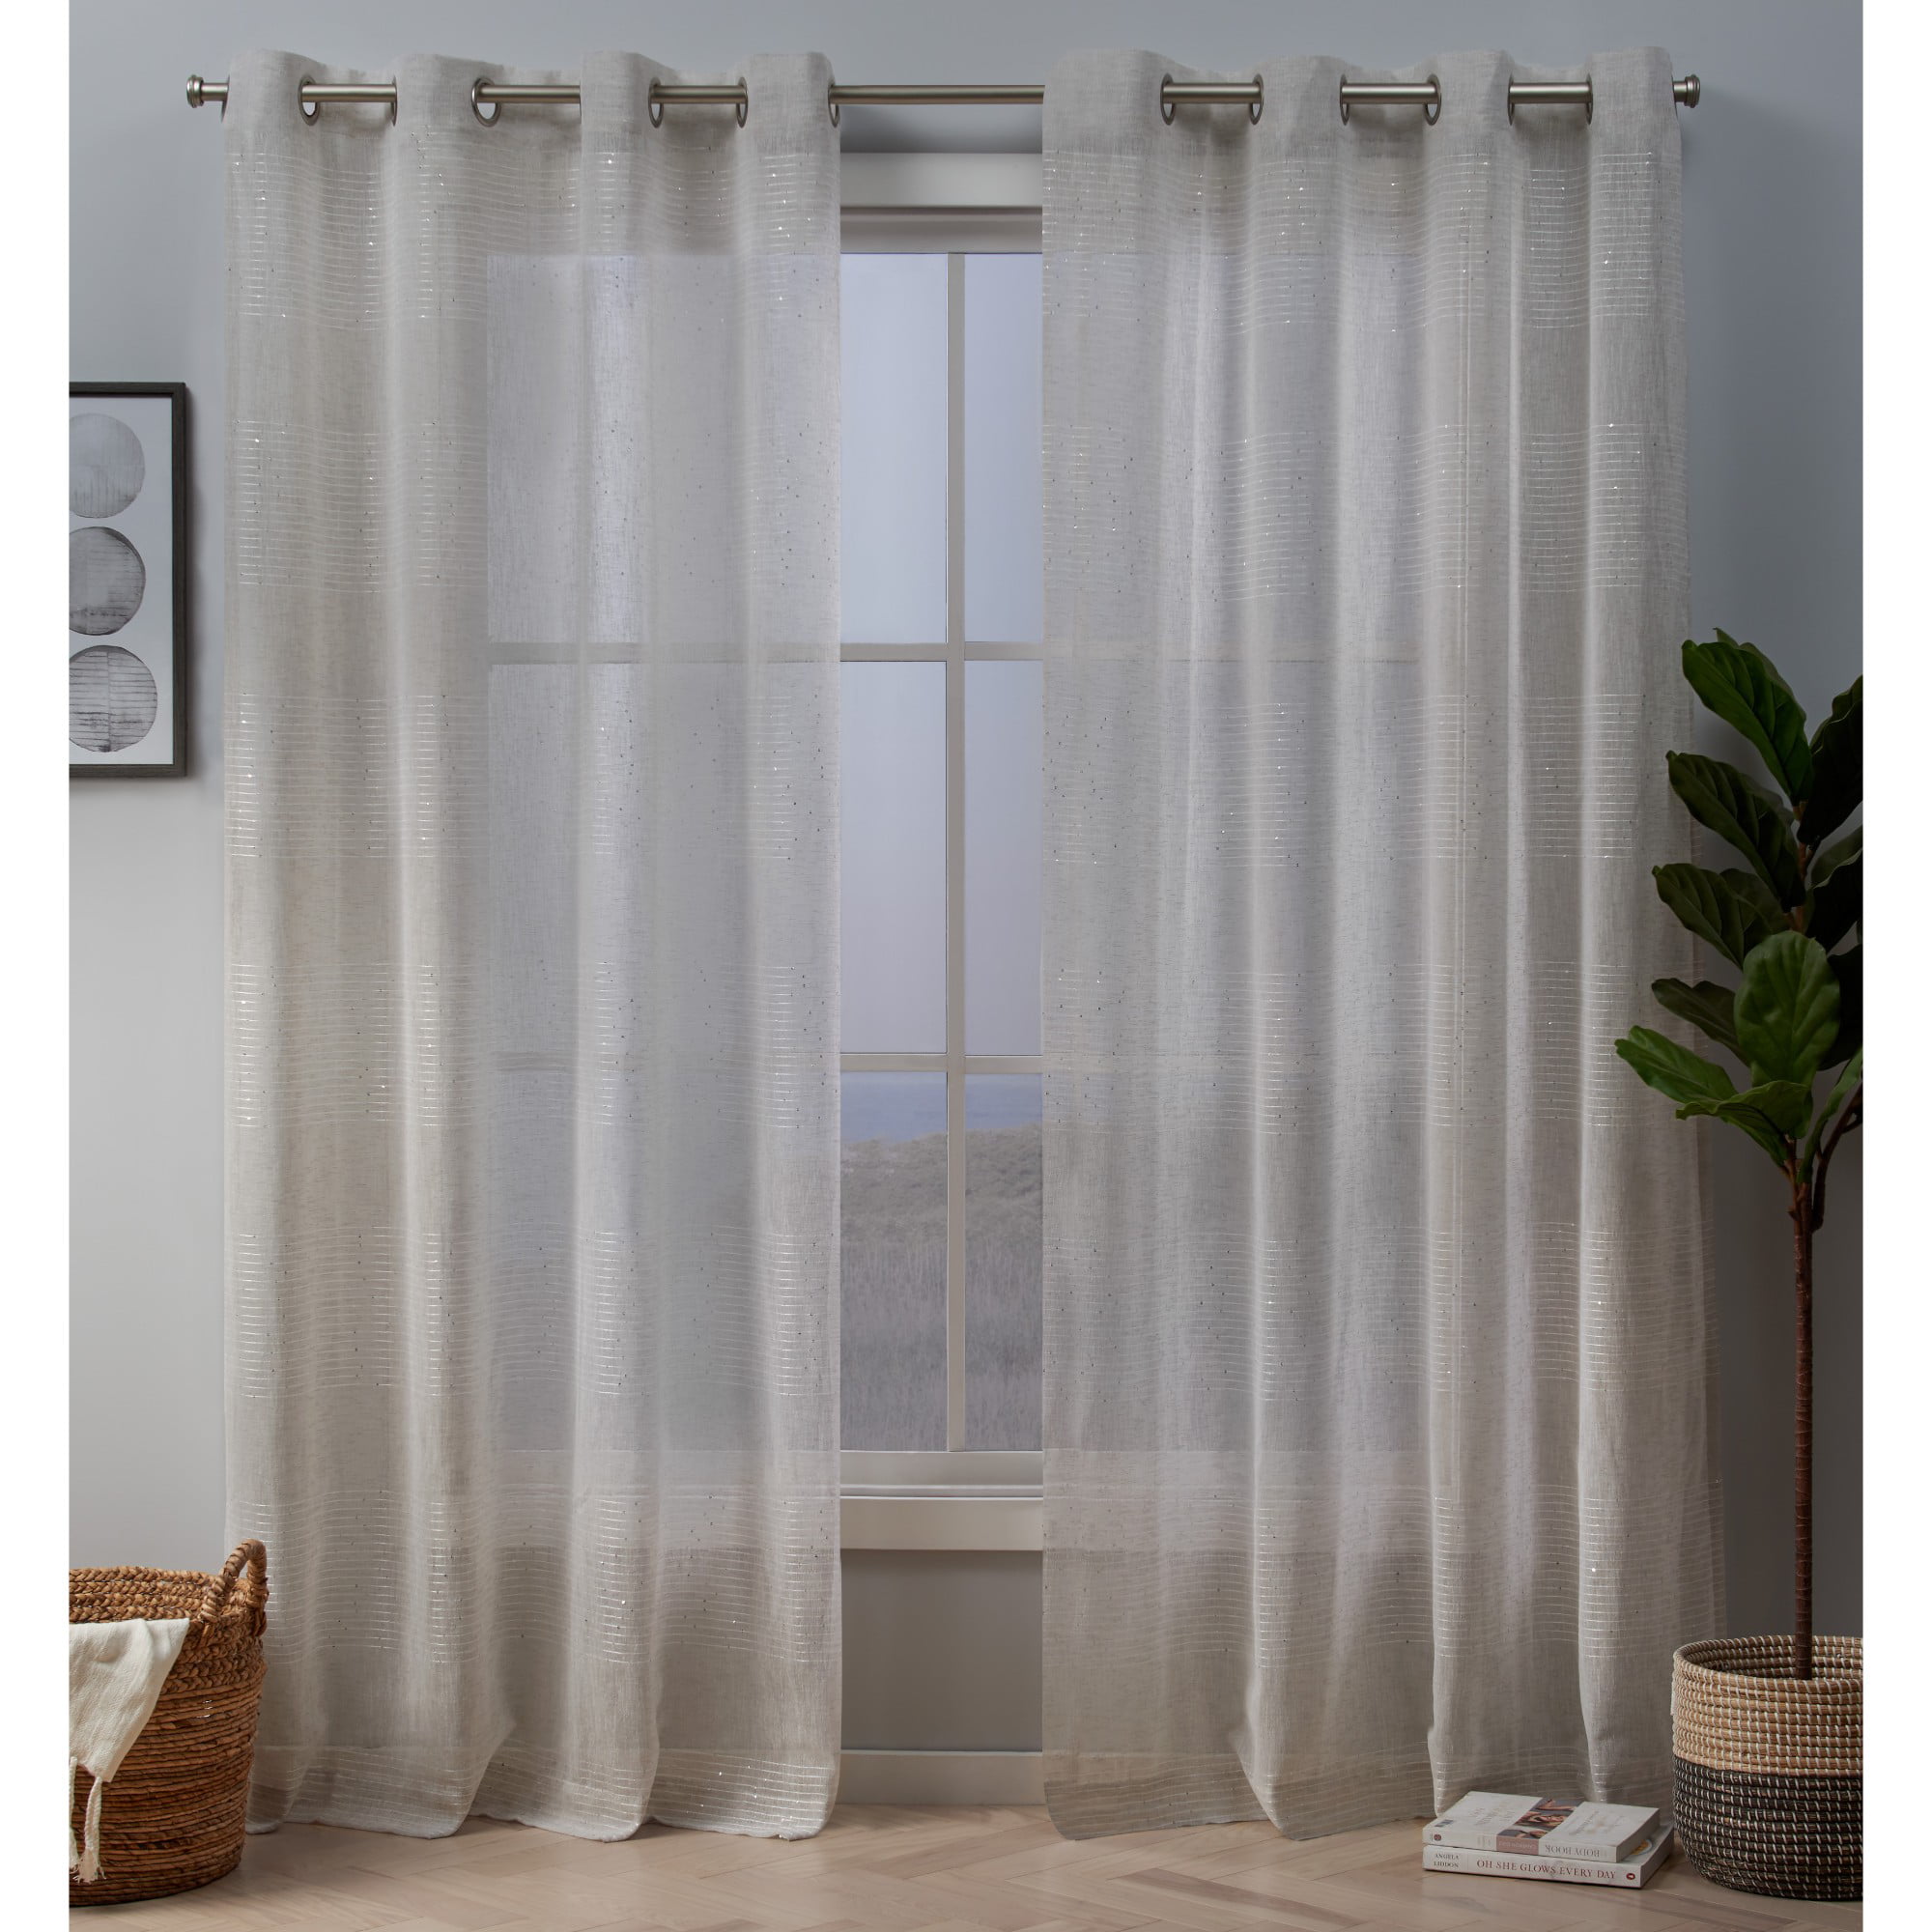 Top Curtain Panels 54x96